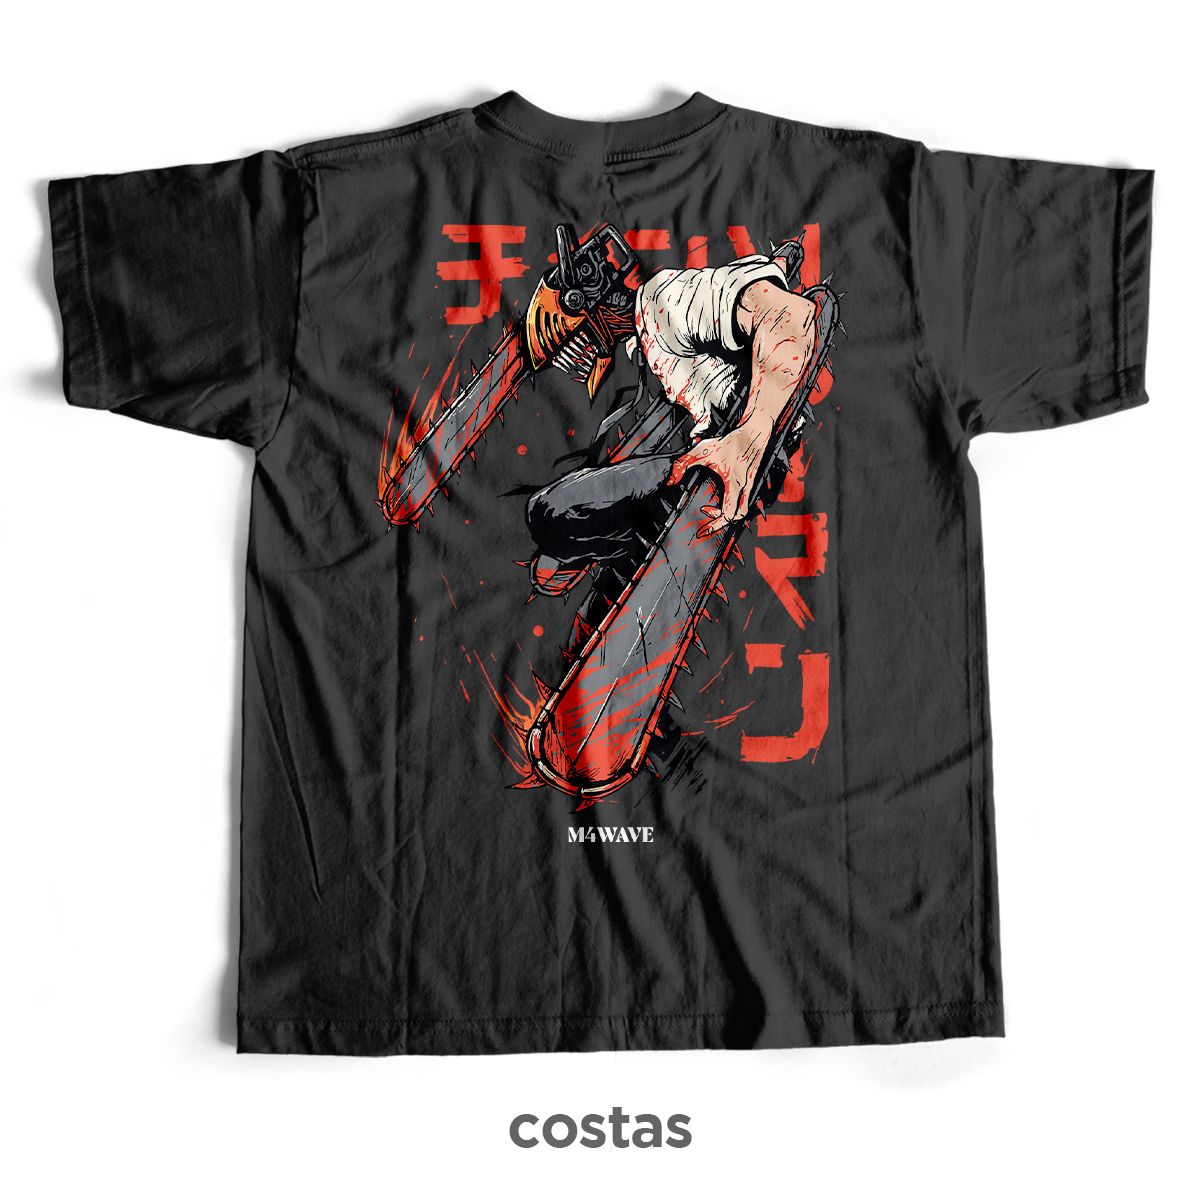 Nome do produto: Camiseta Preta - Chainsaw Demon (Costas)